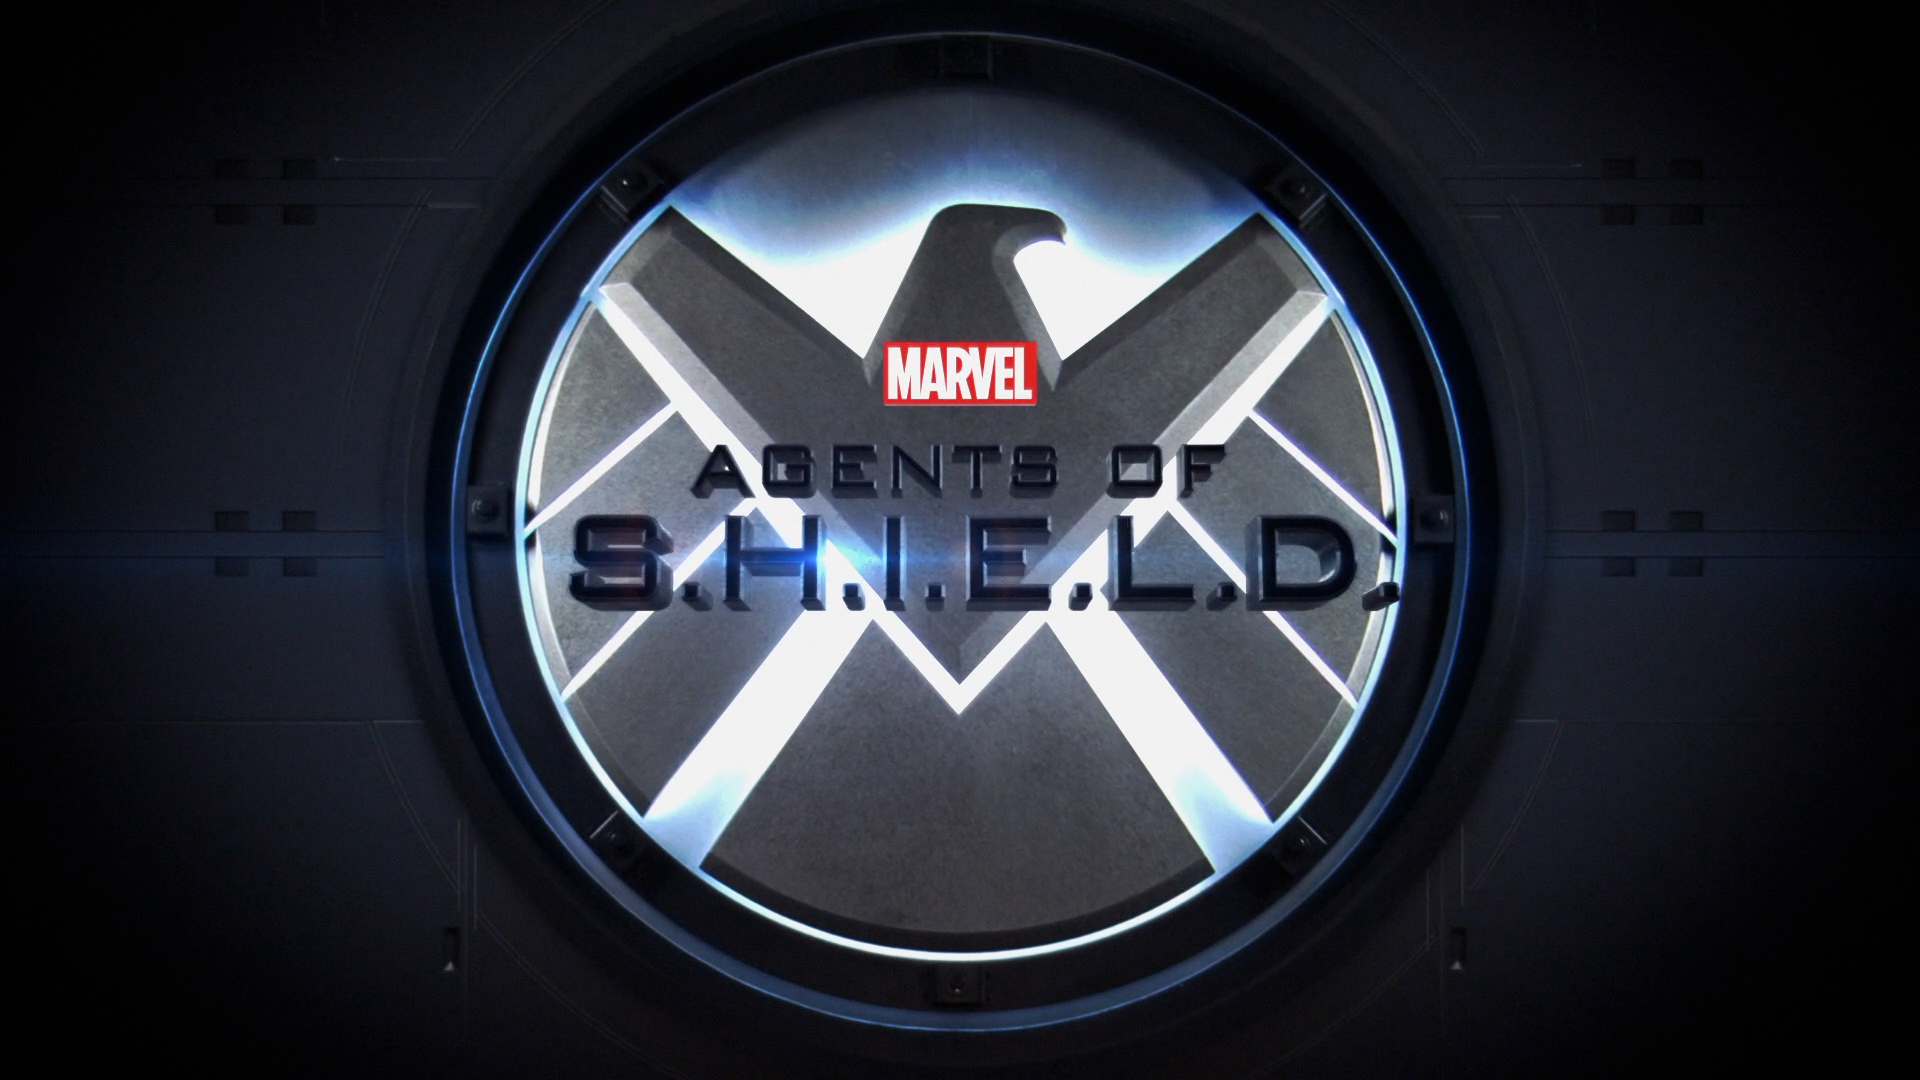 agents of shield season 1 episode 9 torrent download